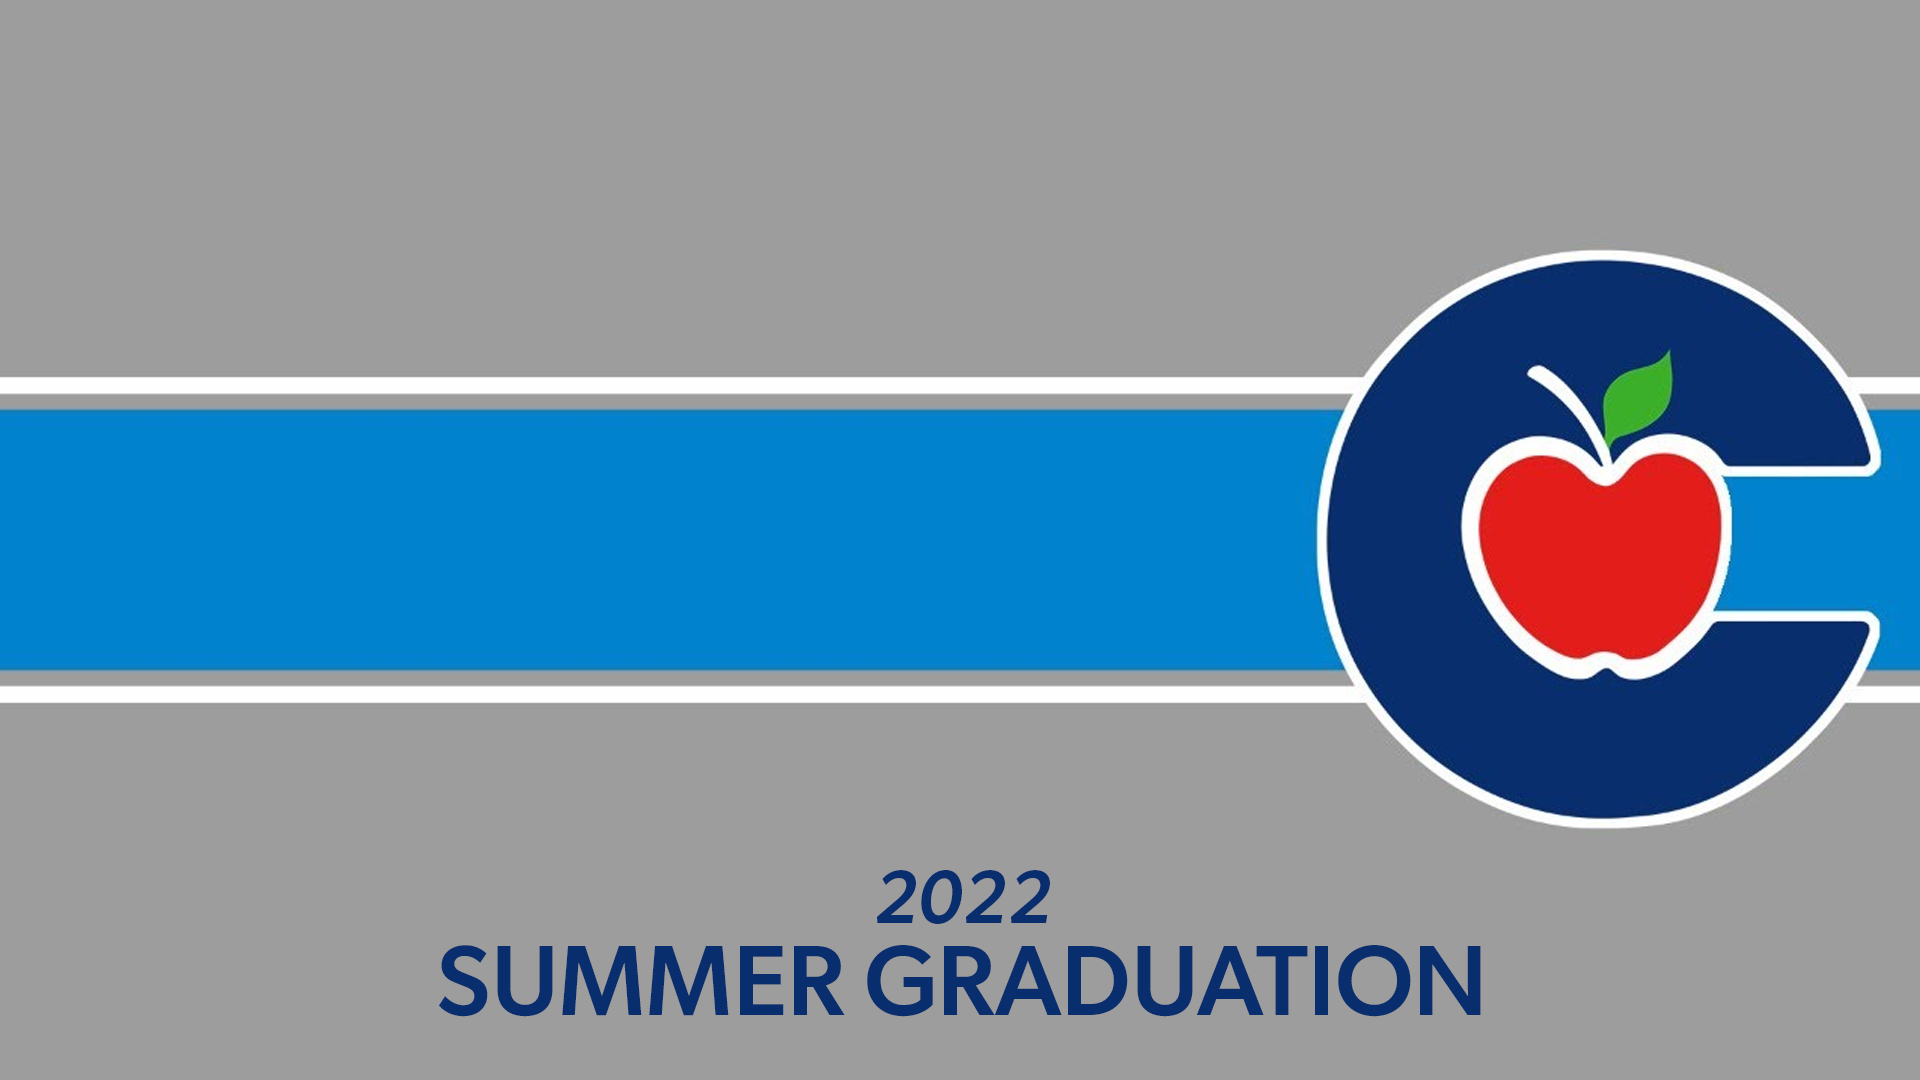 2022 Summer Graduation Graphic